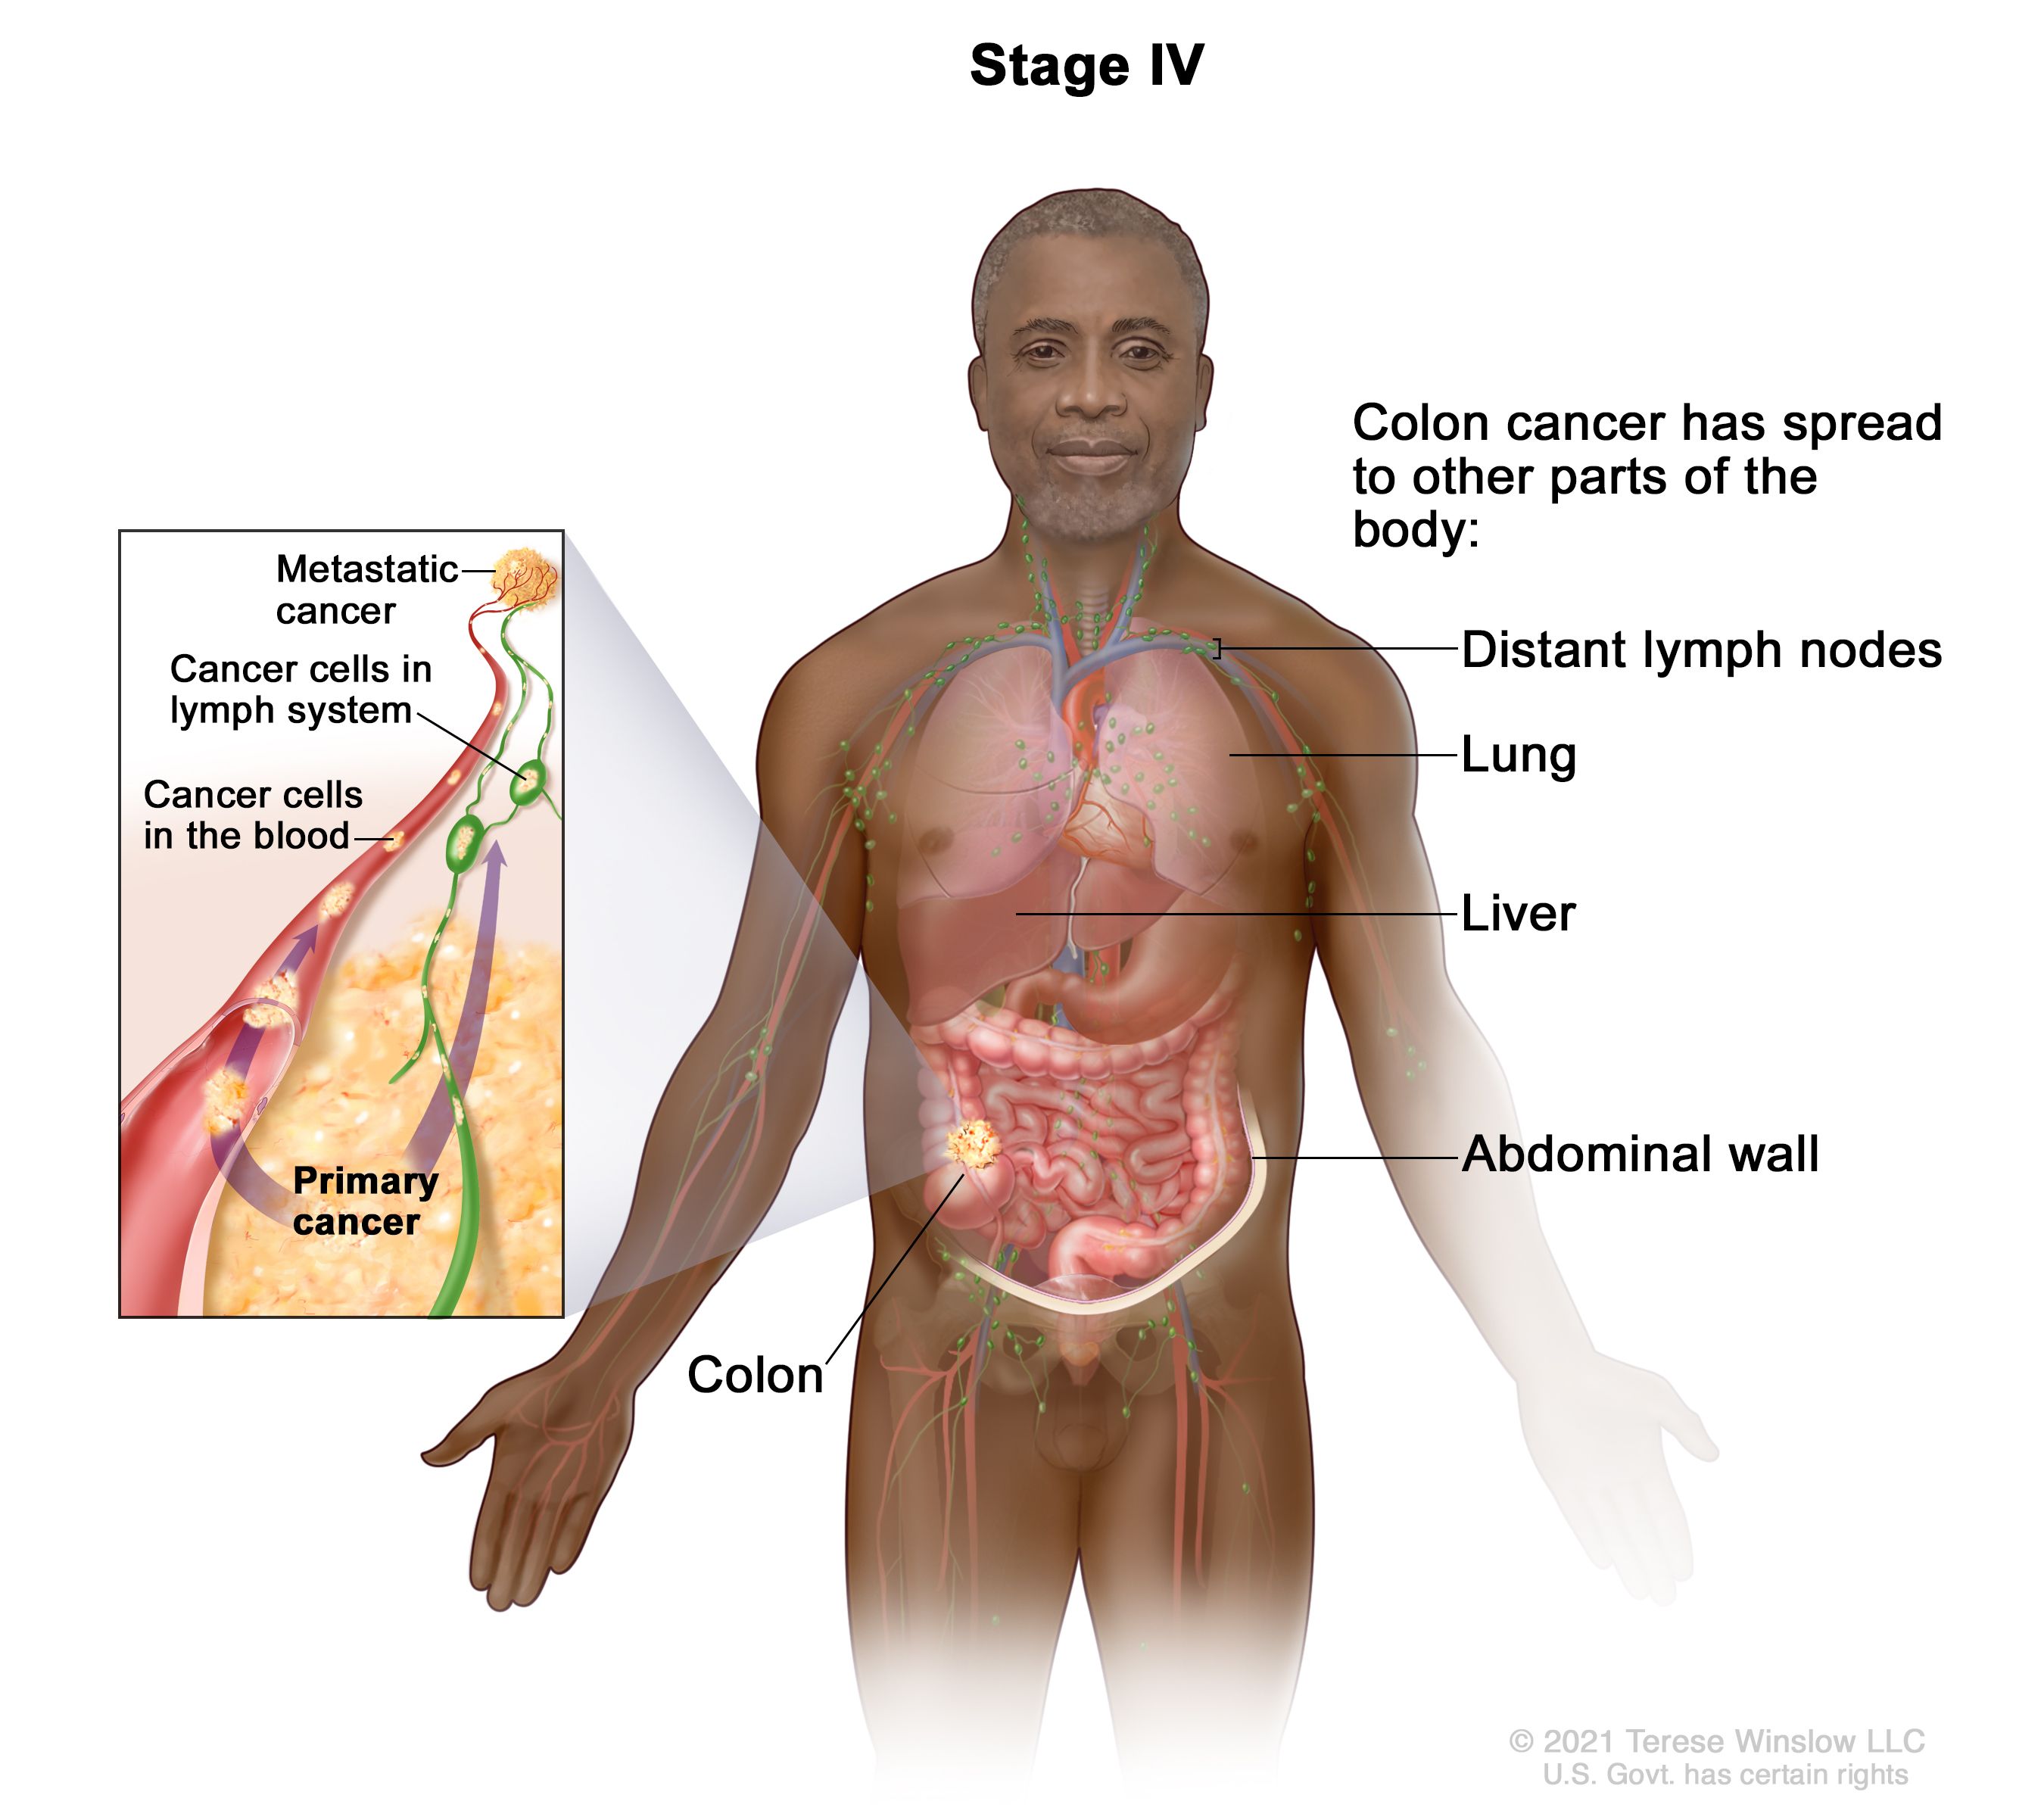 Cancer pancreatic - Wikipedia